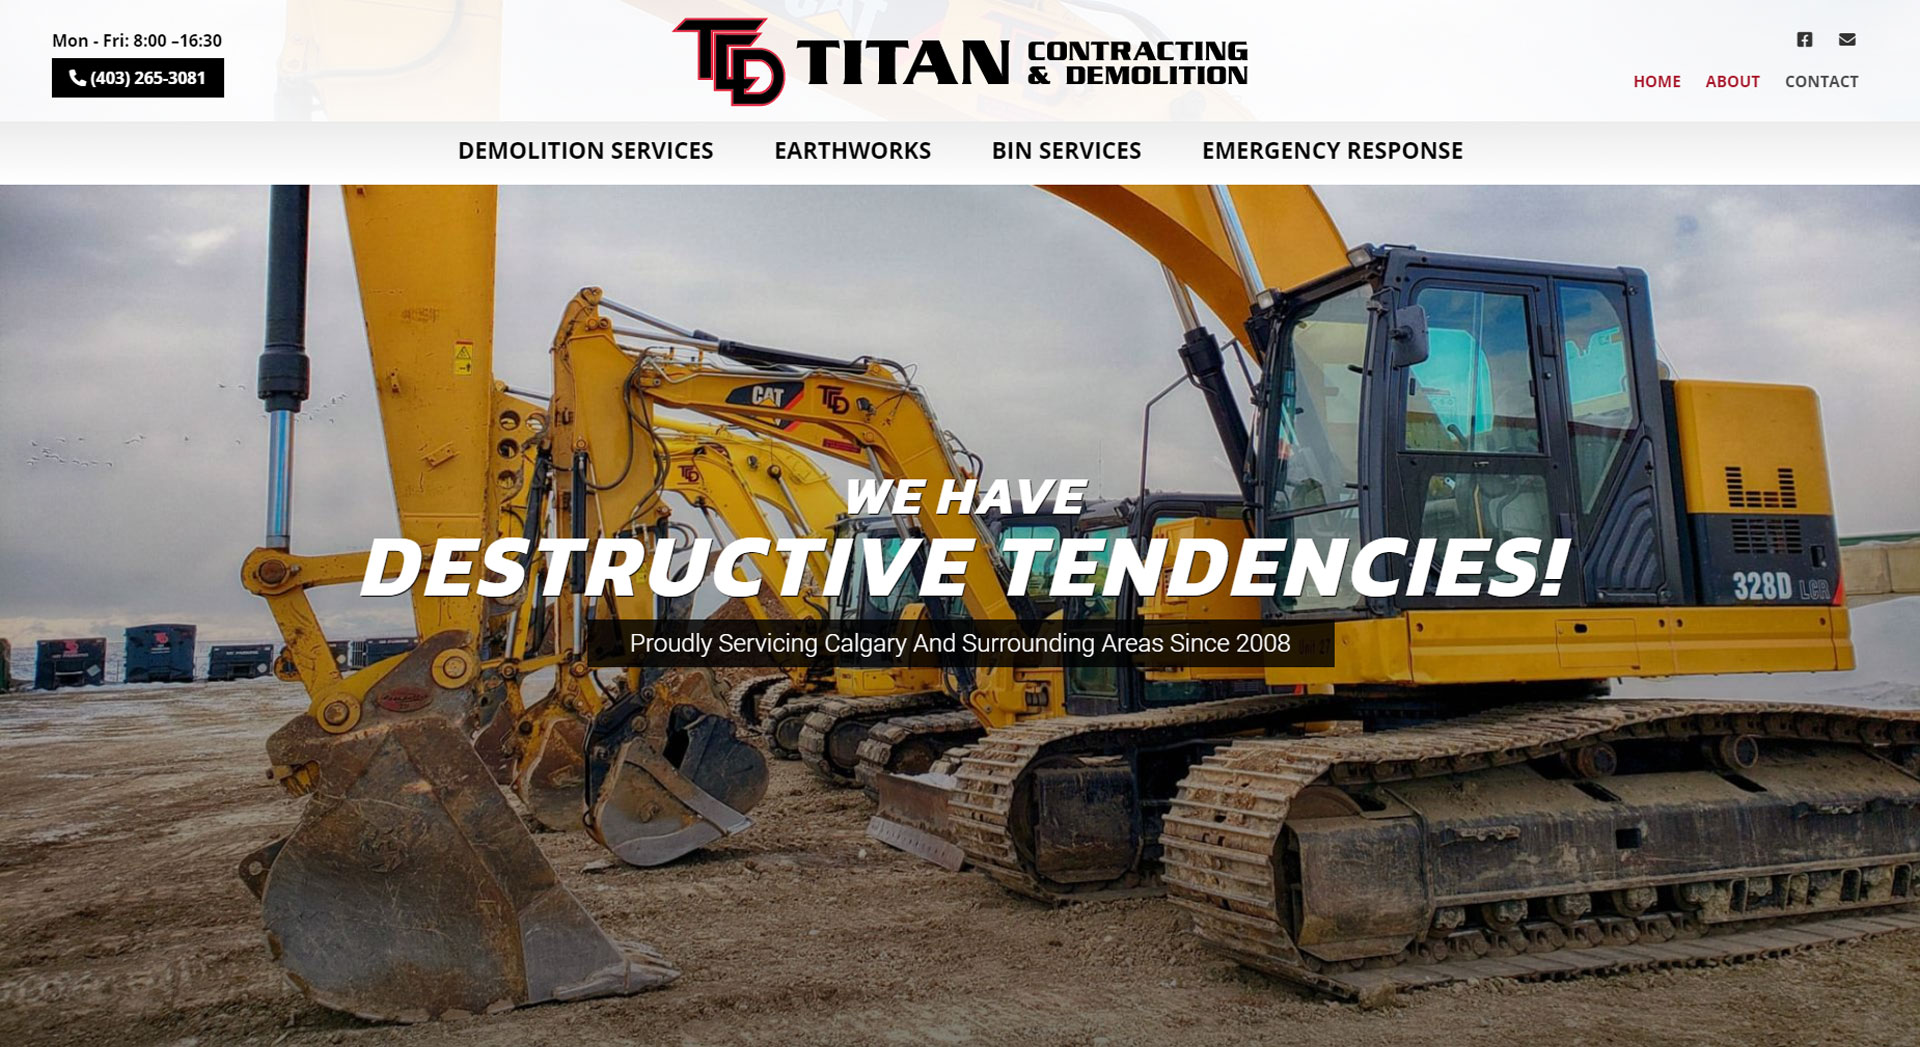 Titan-Contracting-and-Demolition-Ltd.-2020